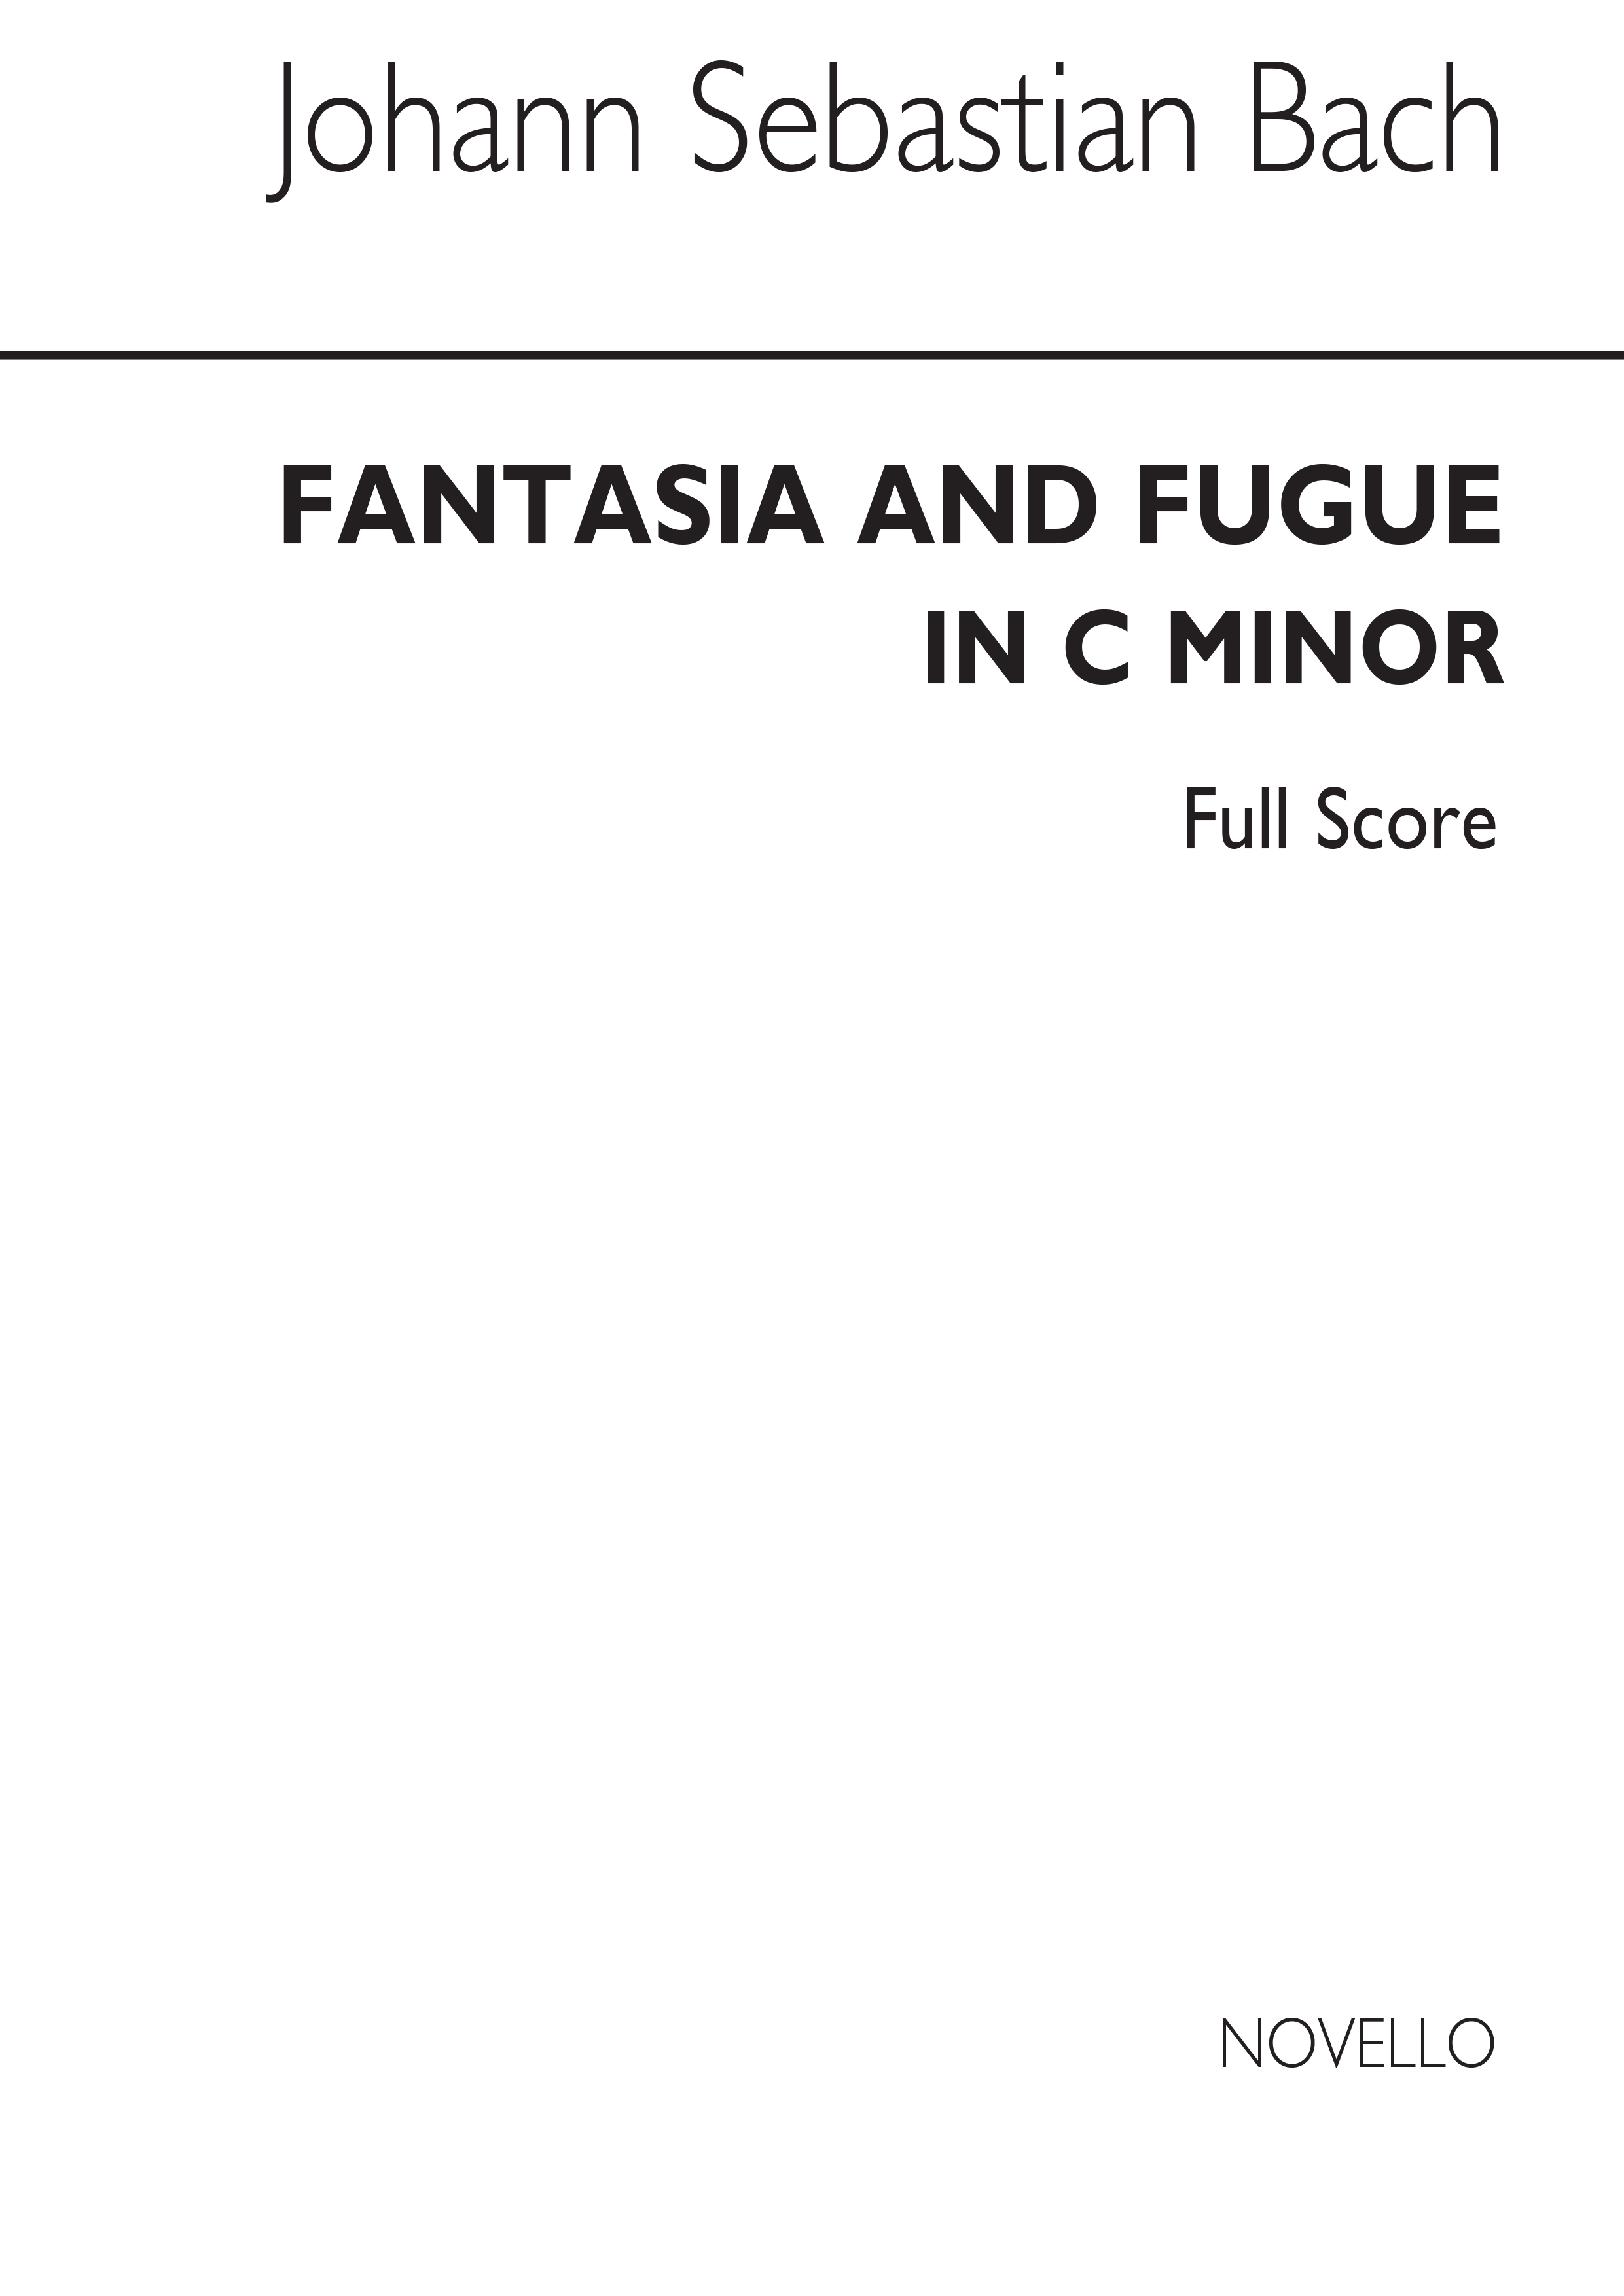 Johann Sebastian Bach: Fantasia And Fugue in C minor (Elgar): Orchestra: